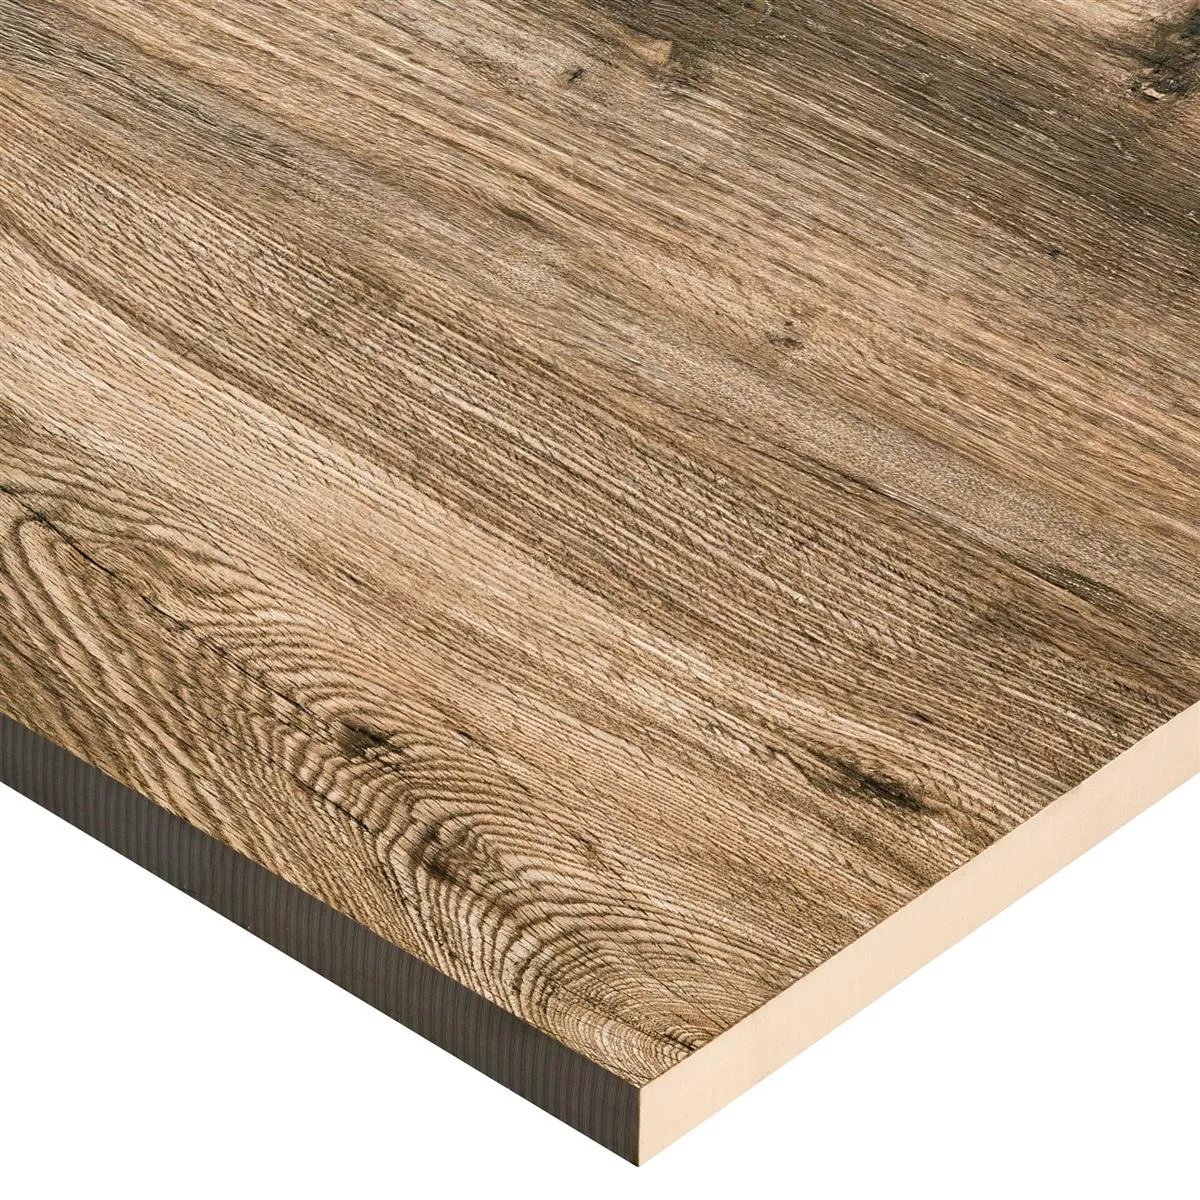 Sample Terrace Tiles Starwood Wood Optic Oak 60x60cm